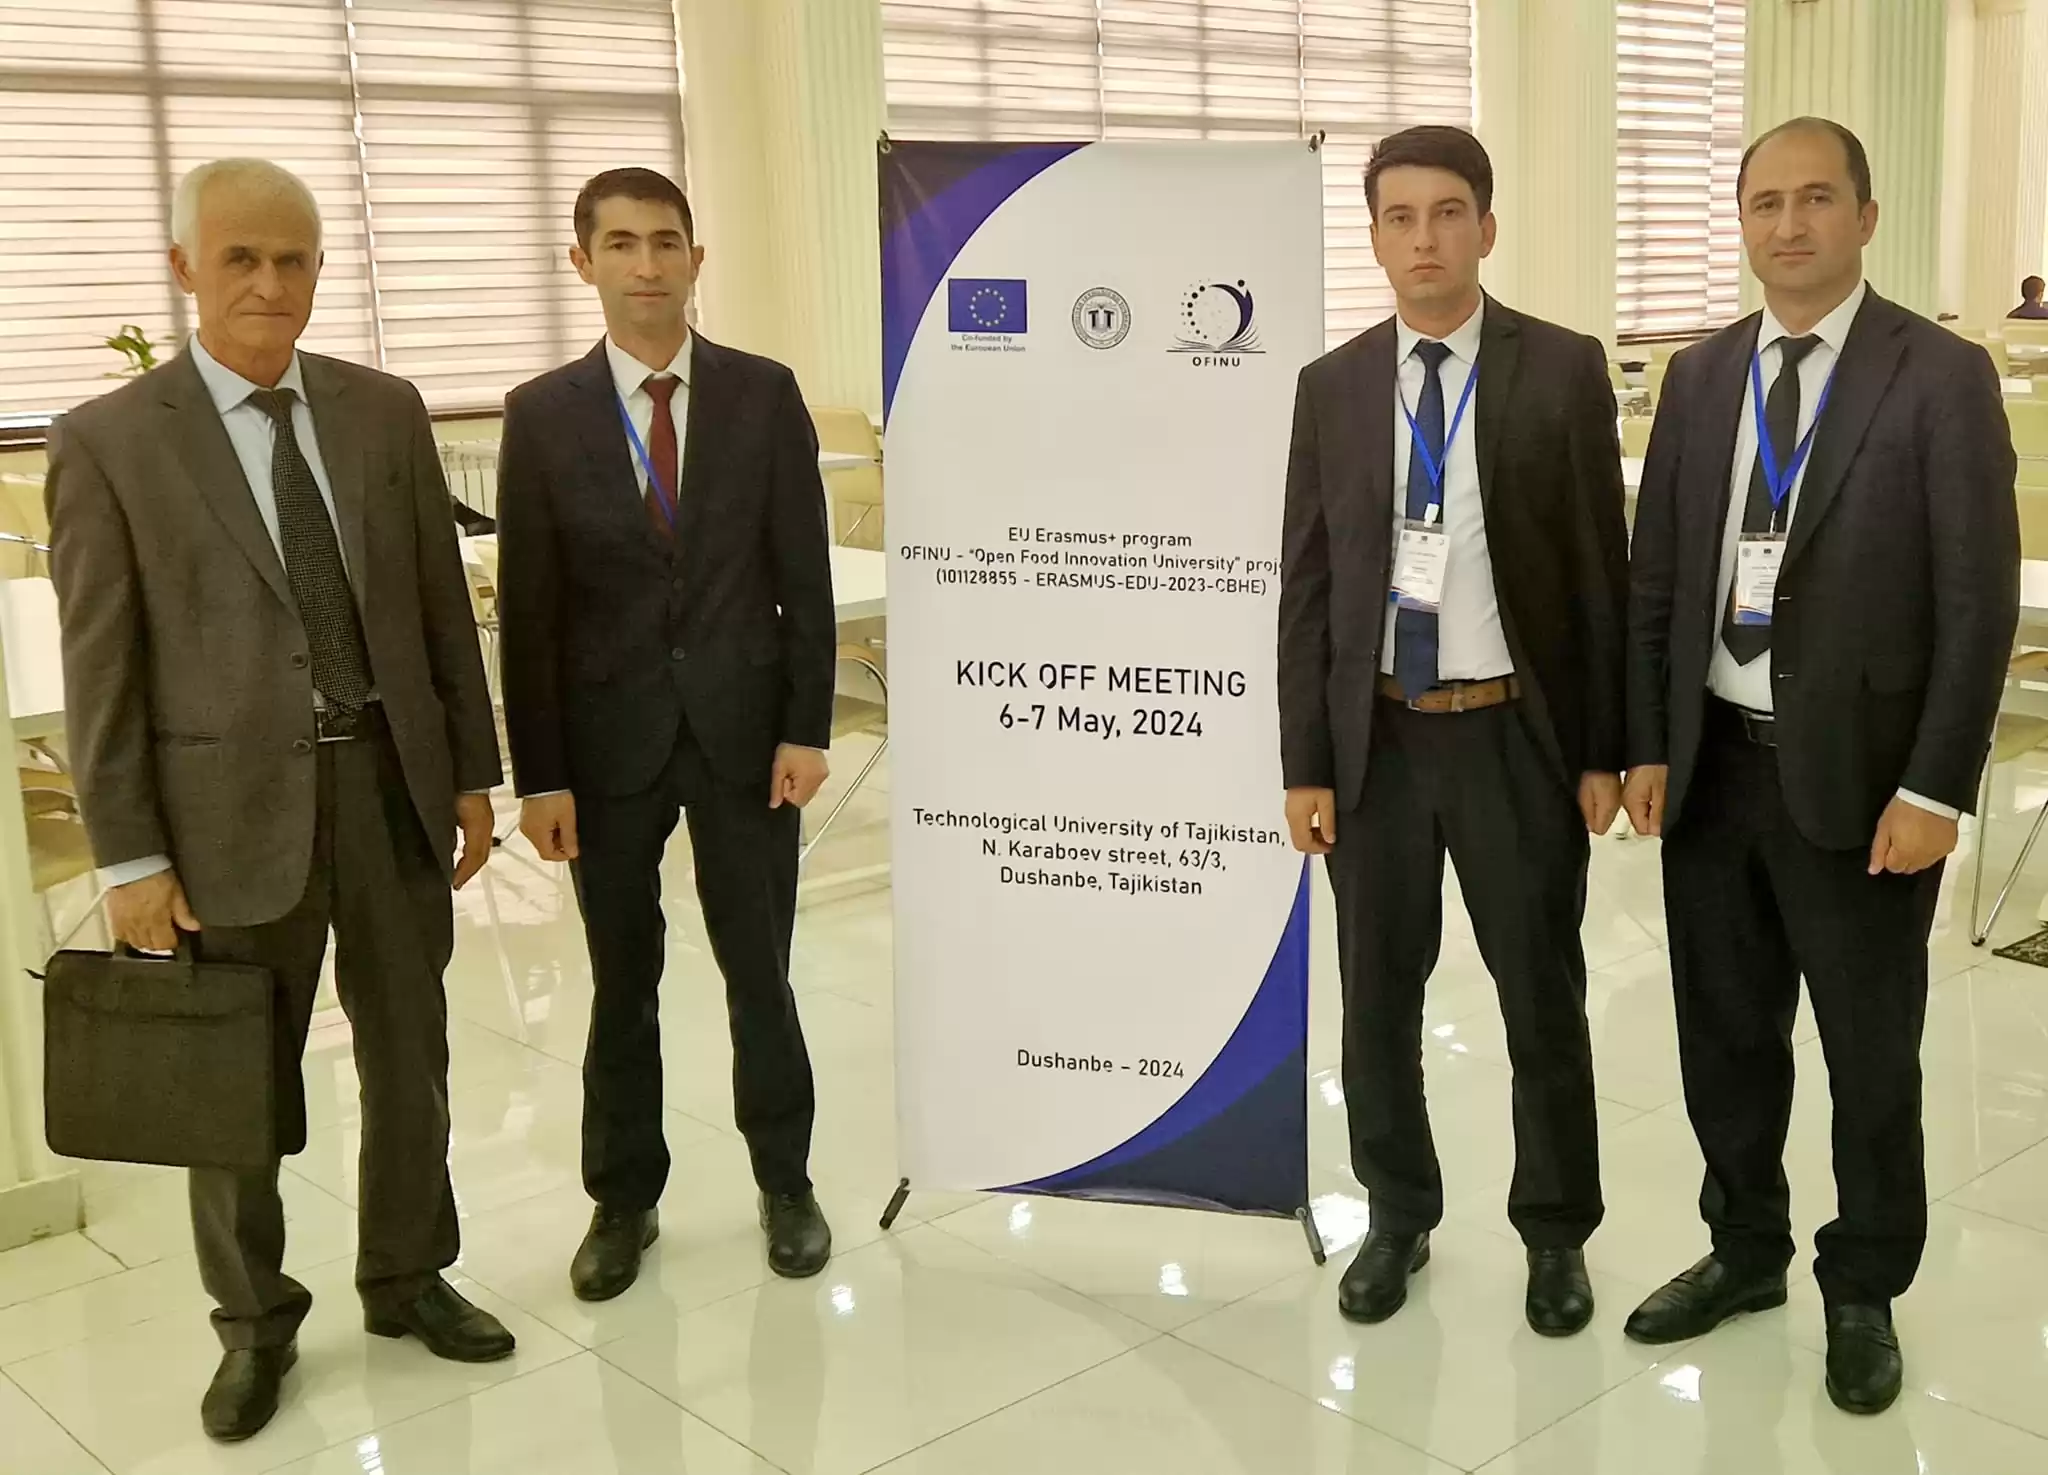 Starting of Kick-off meeting of OFINU ERASMUS+ project in Technological University of Tajikistan